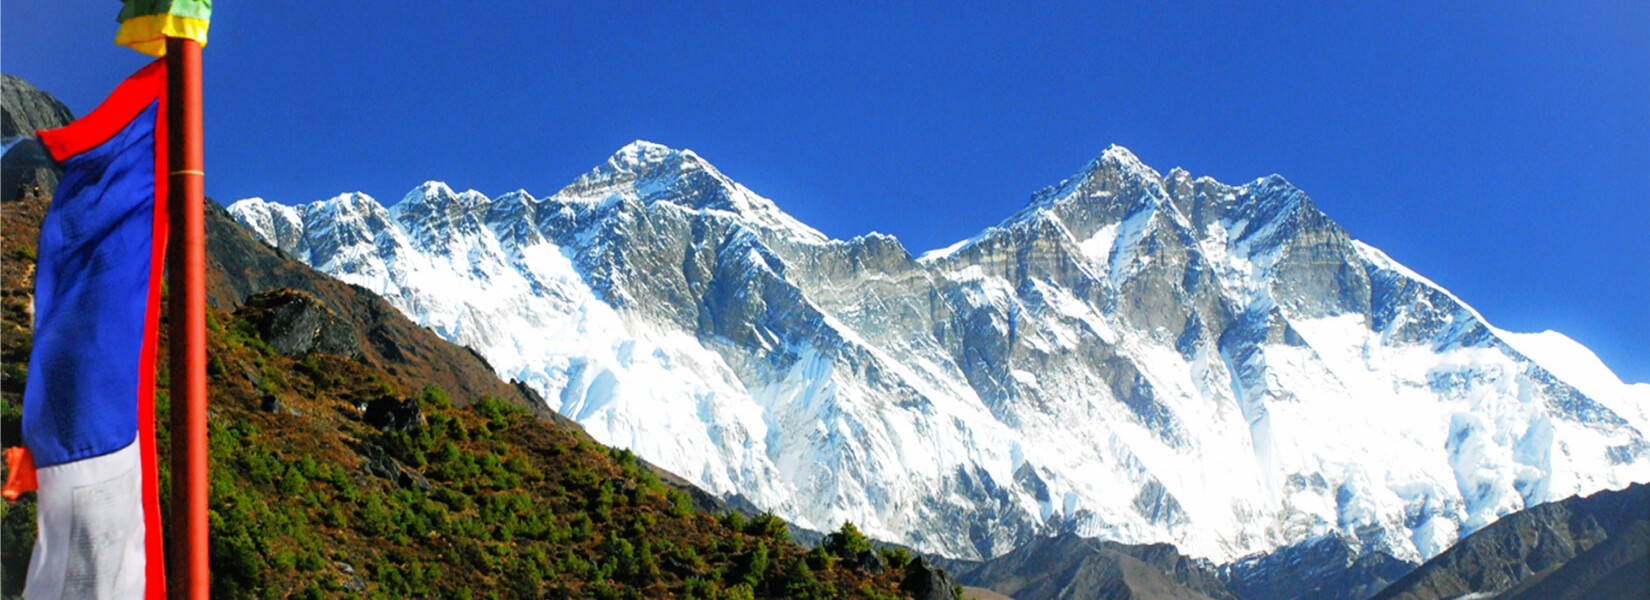 Nepal Everest View